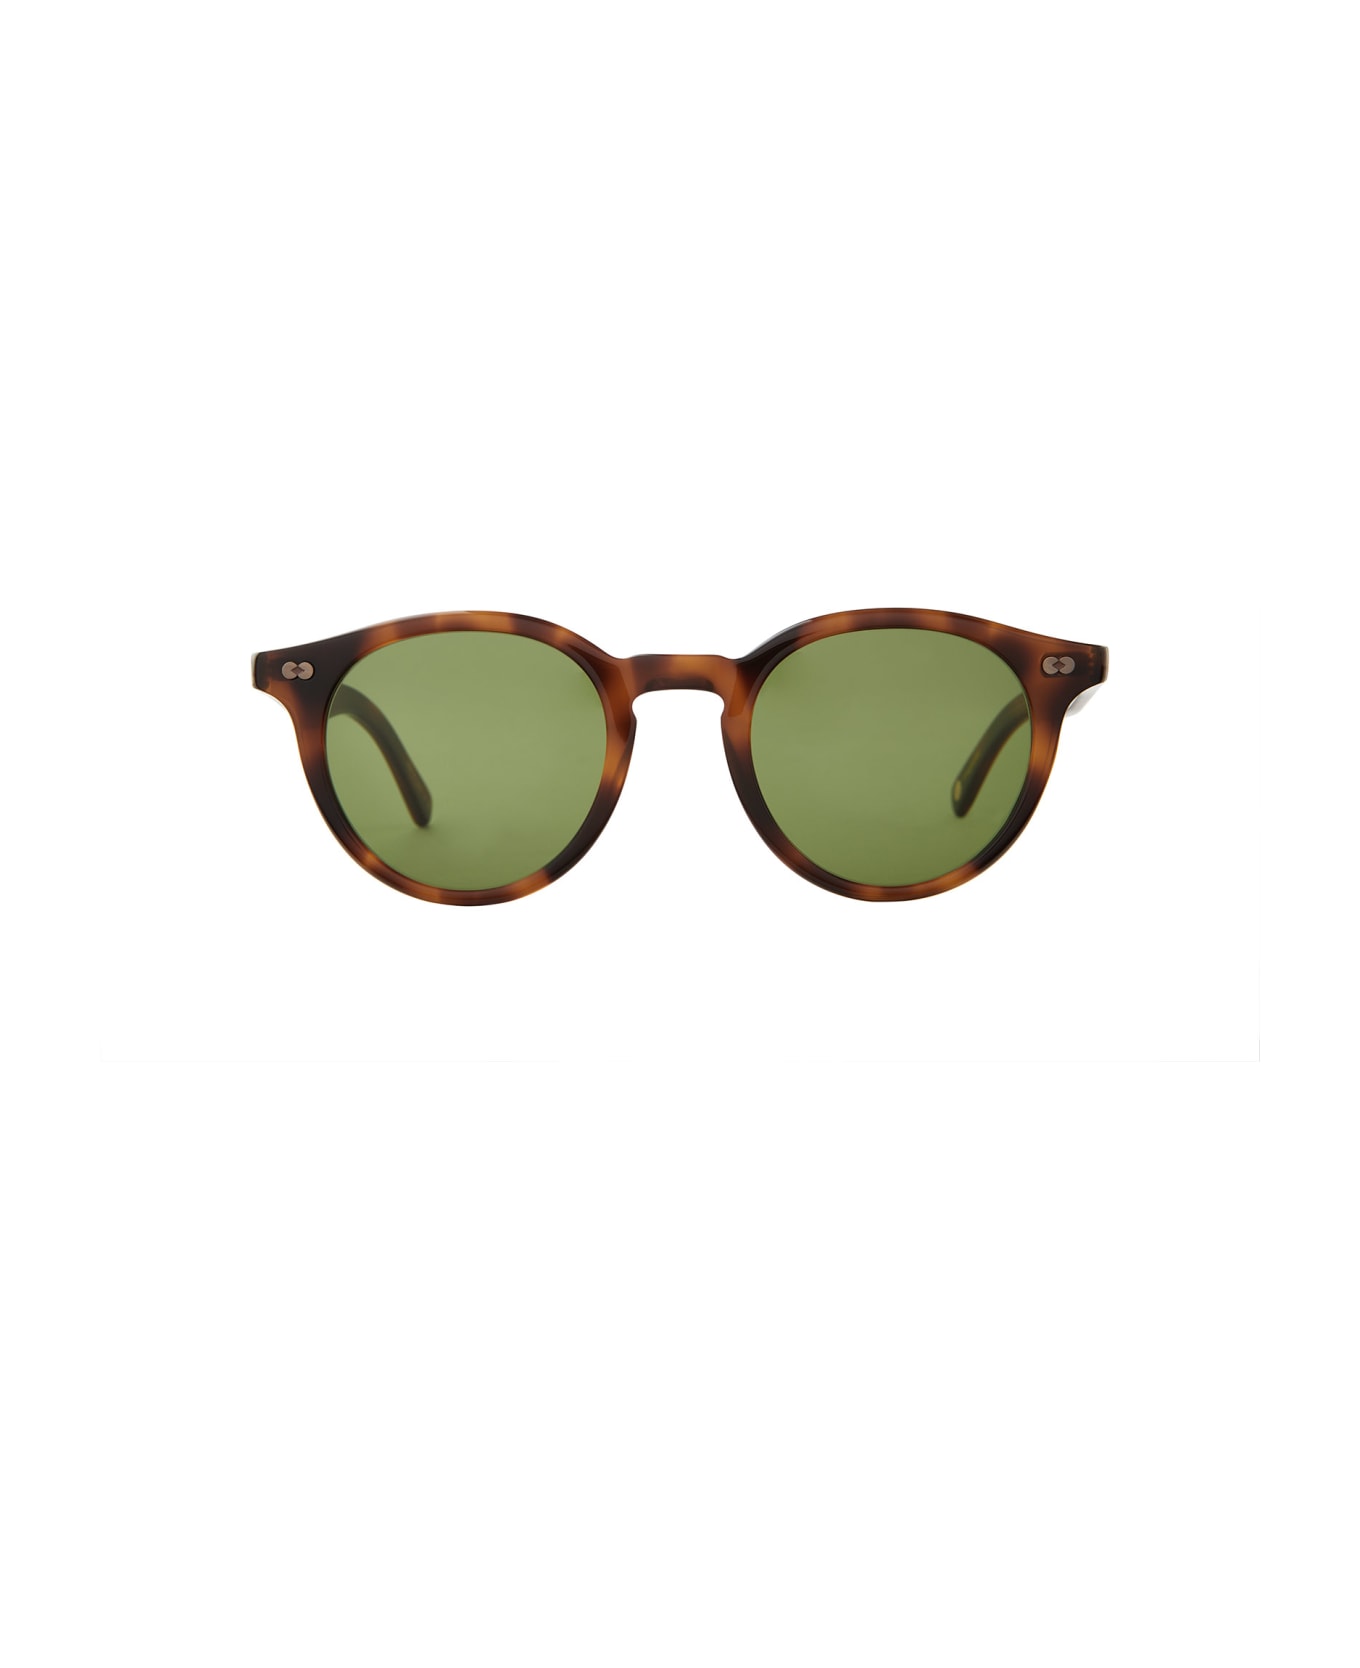 Garrett Leight Clune X Sun Spotted Brown Shell Sunglasses - Spotted Brown Shell サングラス